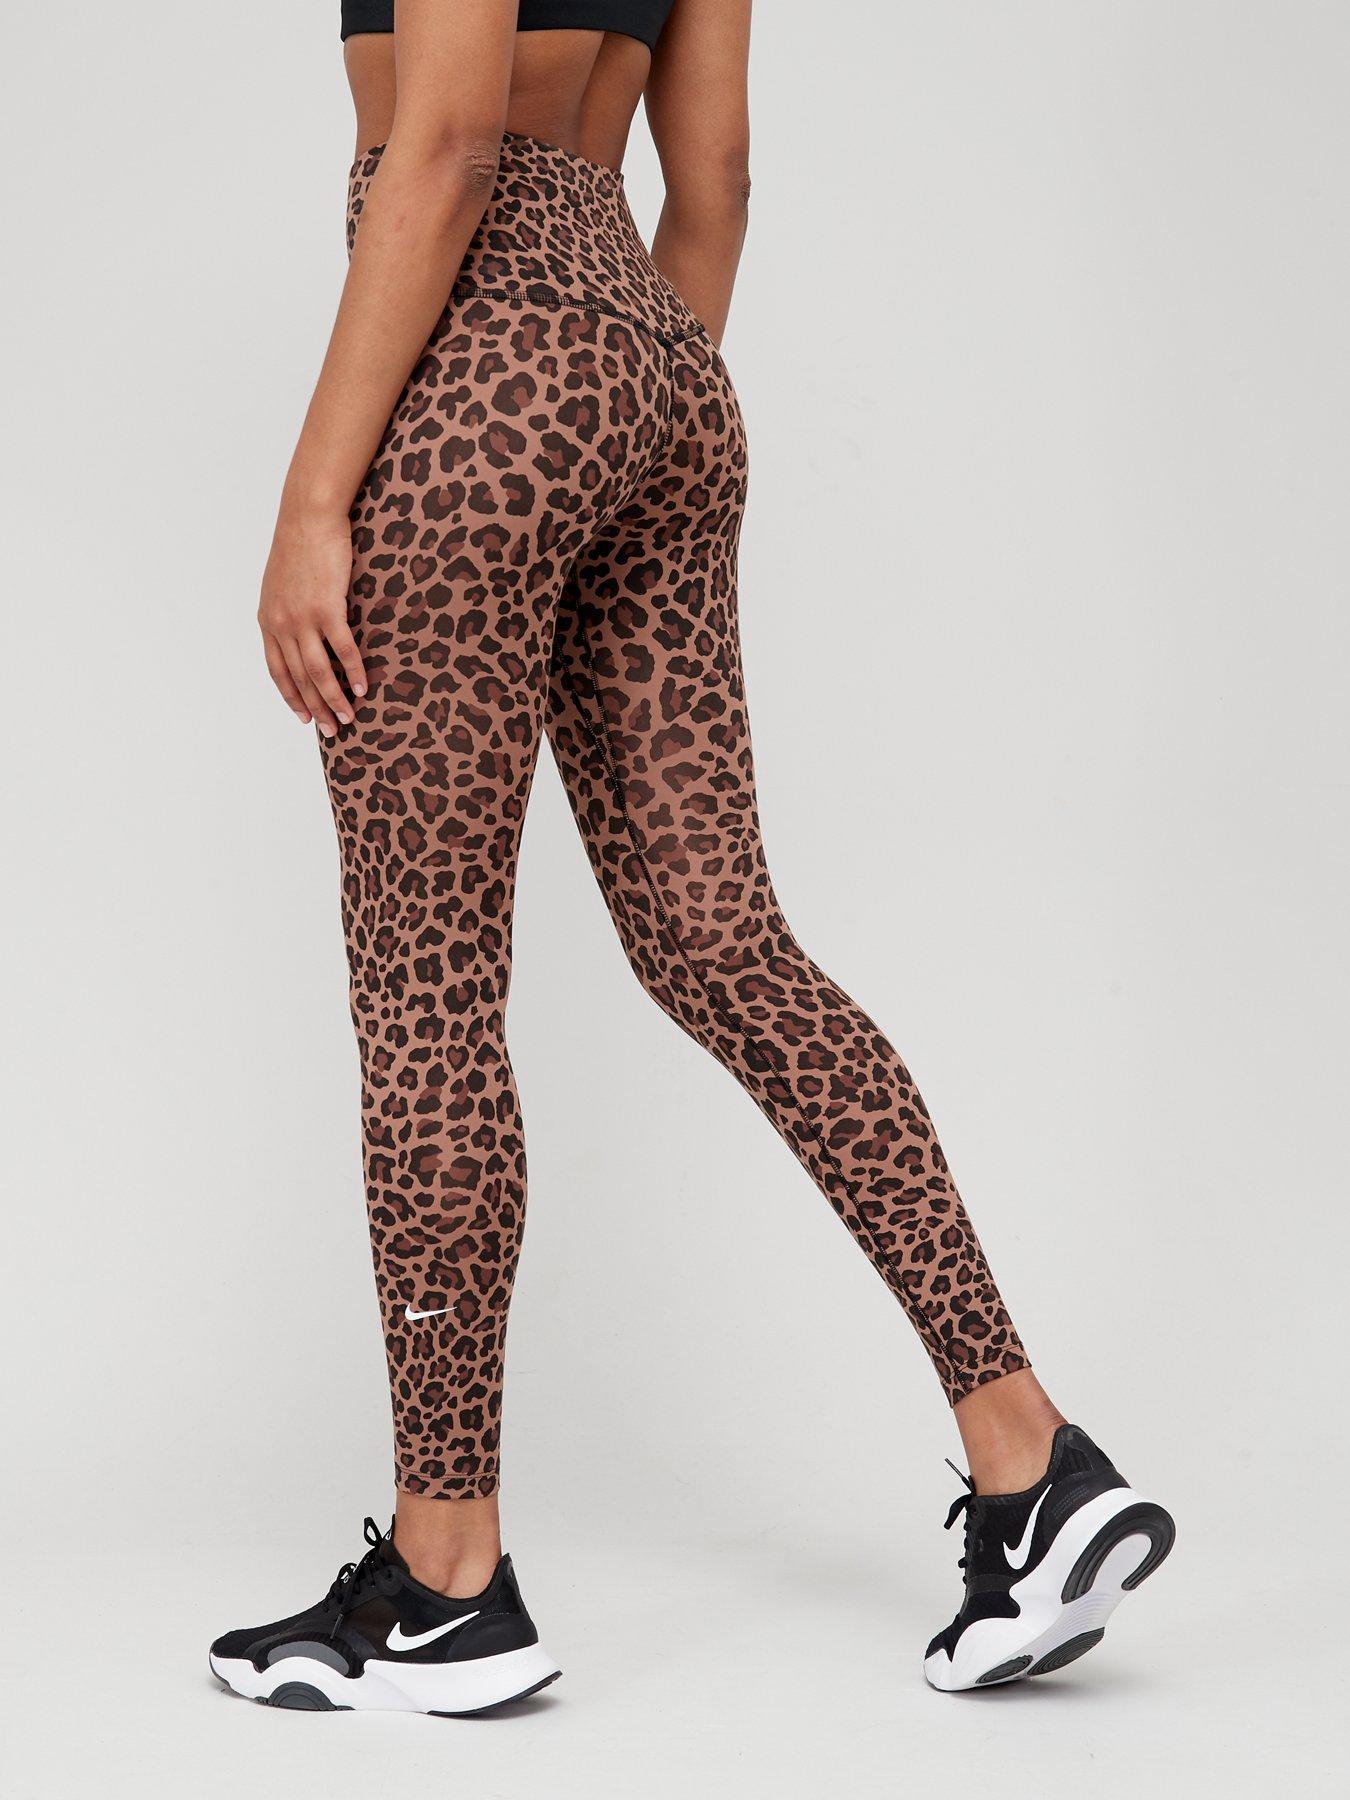 Nike The One Dri-FIT Leggings - Leopard Print